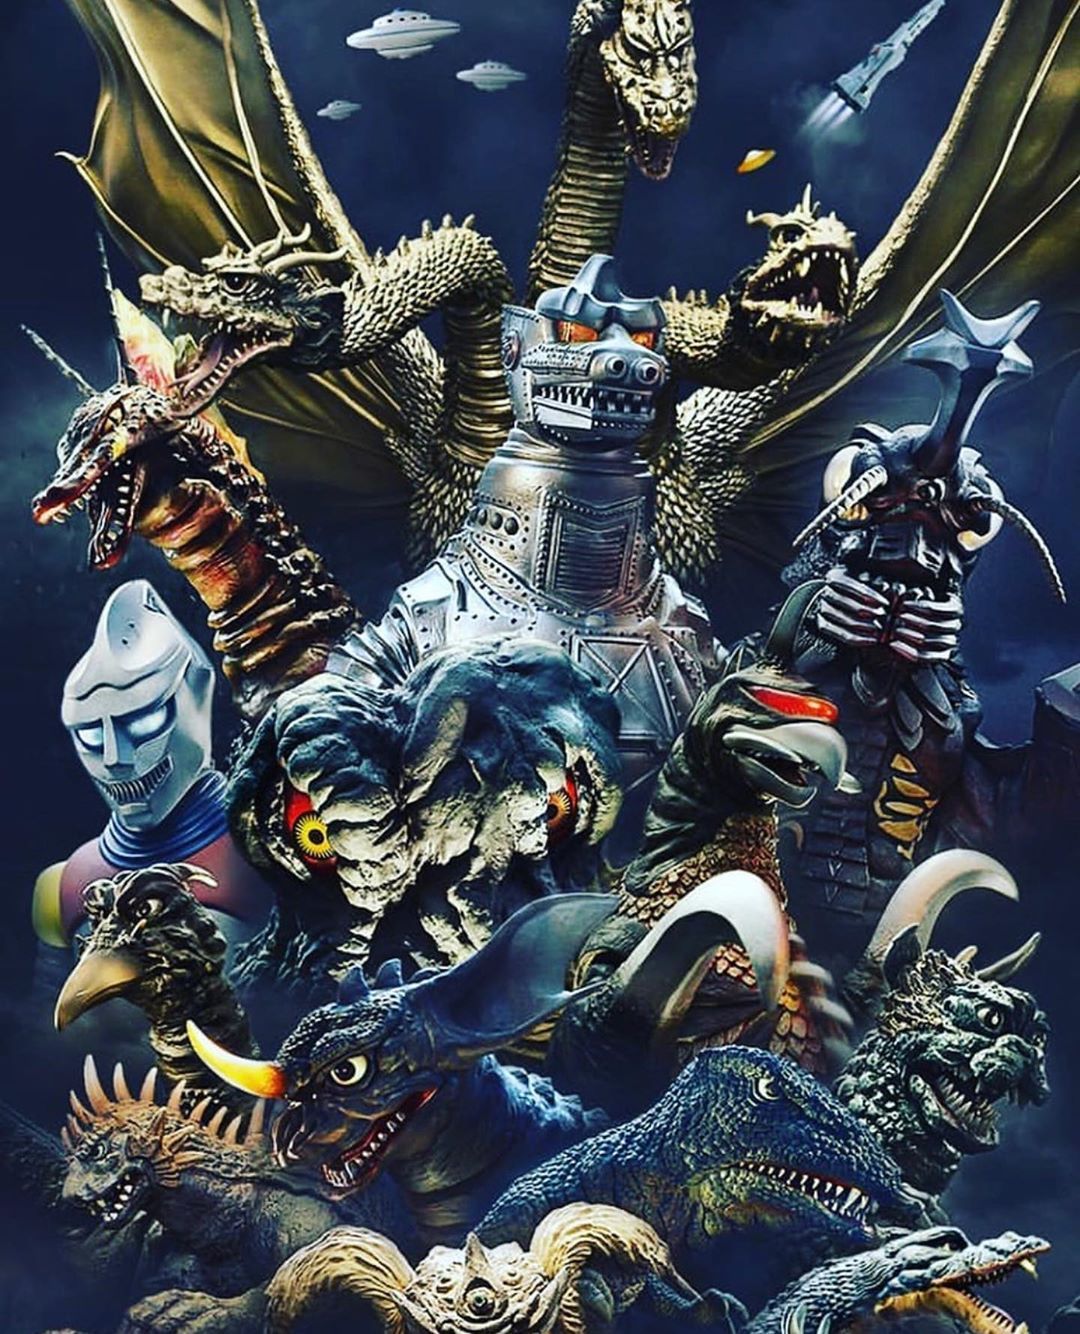 GMK Godzilla runs the Showa Era gauntlet